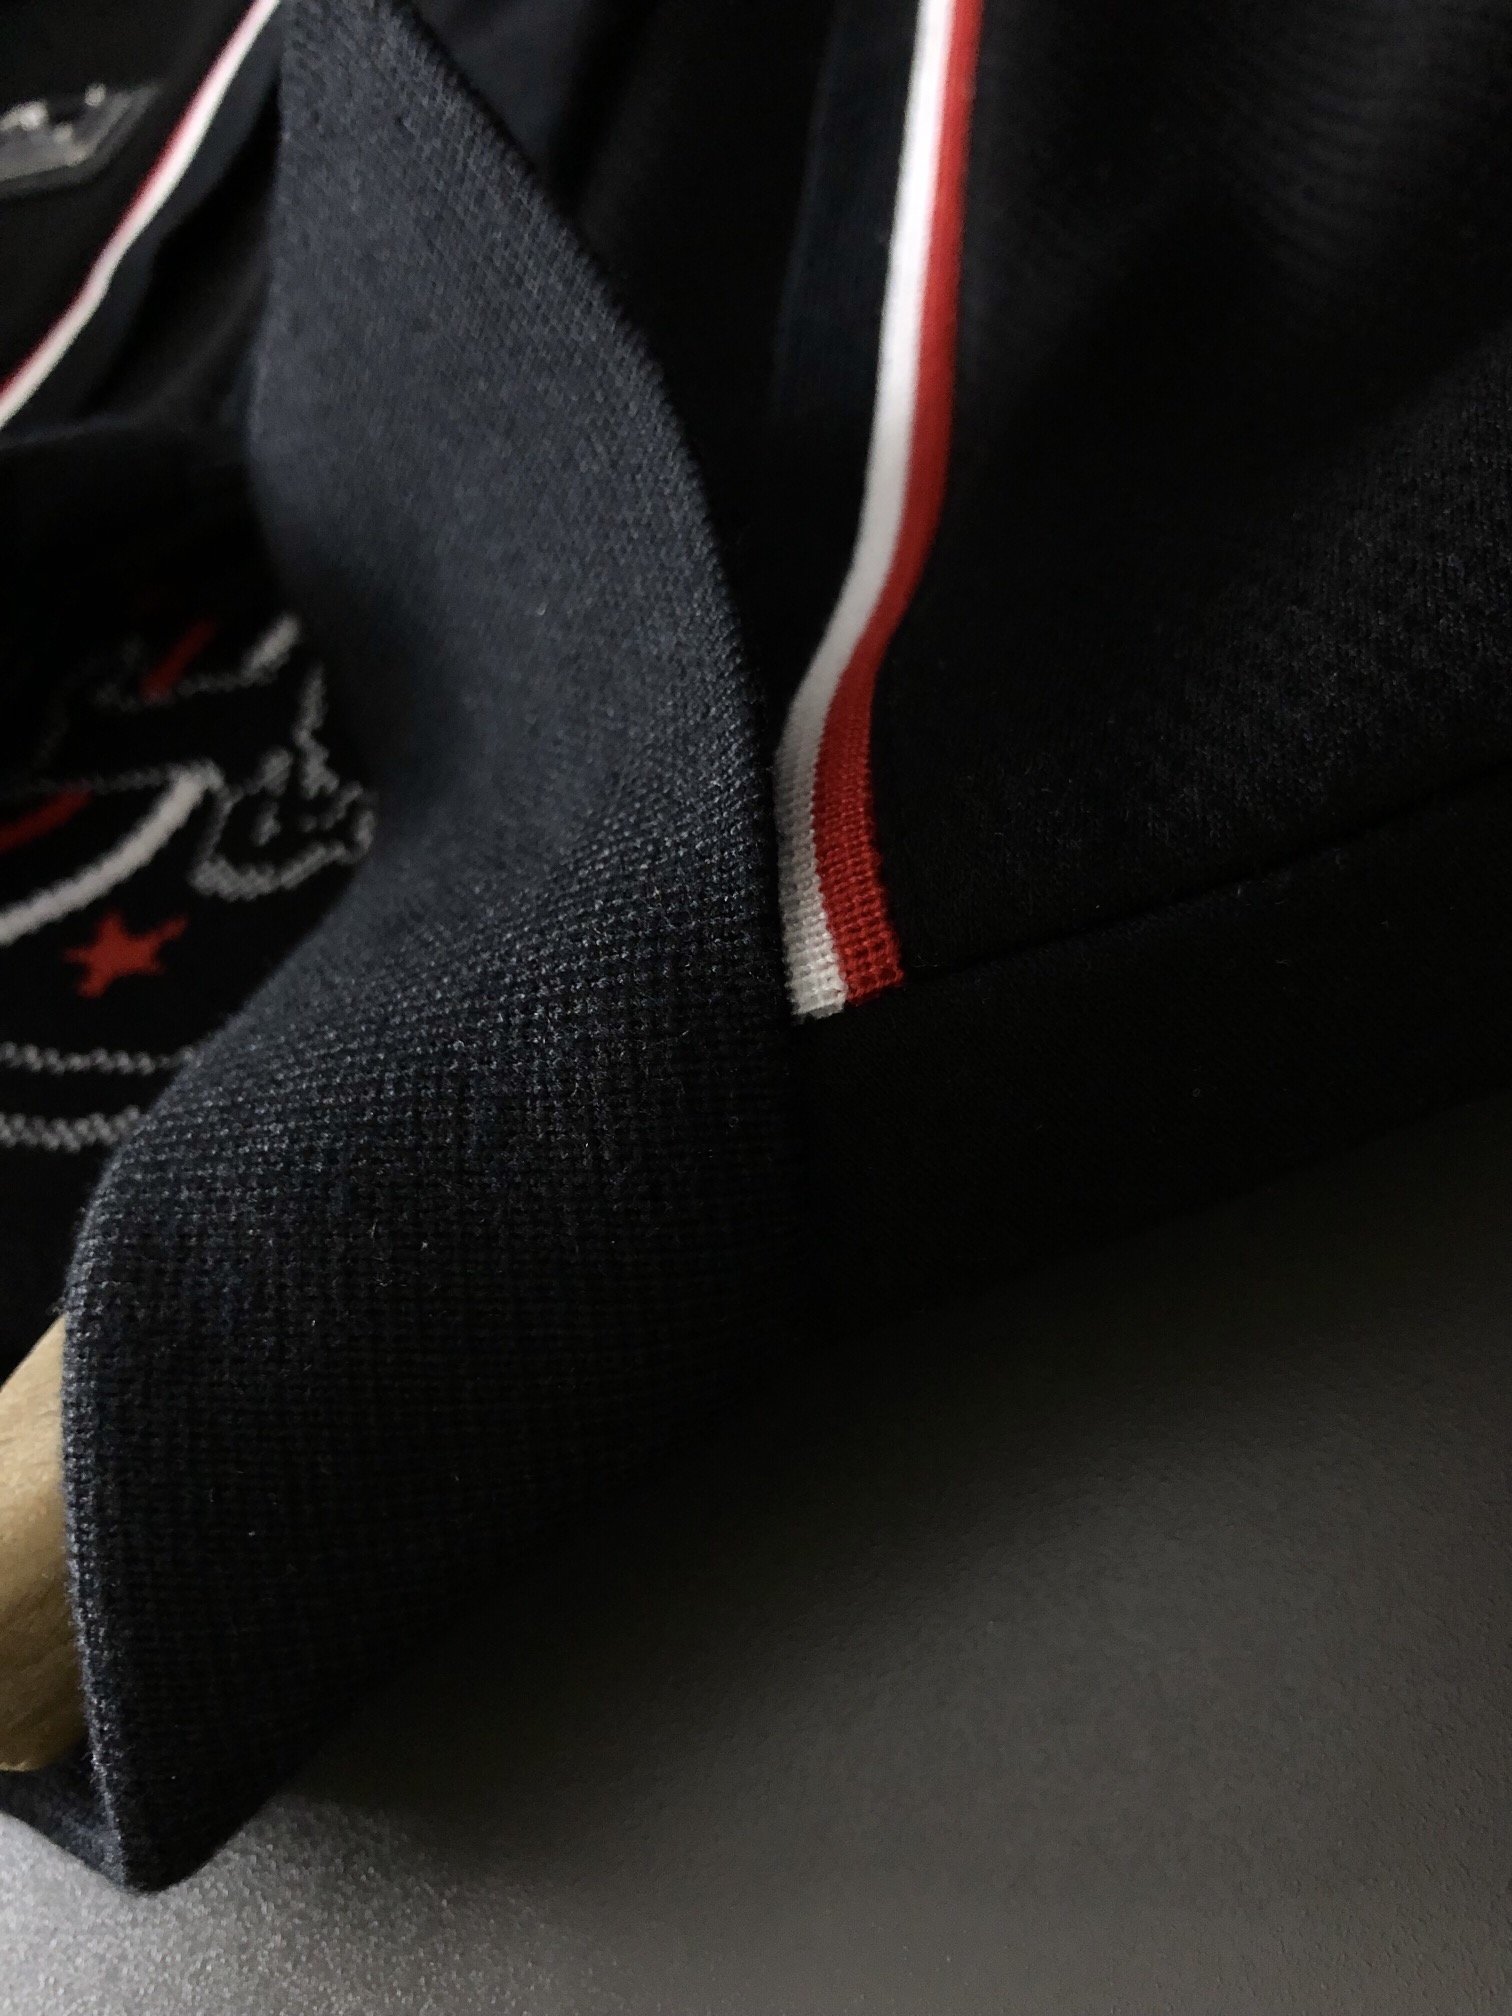 TB*最新最顶级版本黑色织带拼接金属logo拼接立领夹克专柜款立领外套最顶级的品质专柜原单顶级制作工艺进